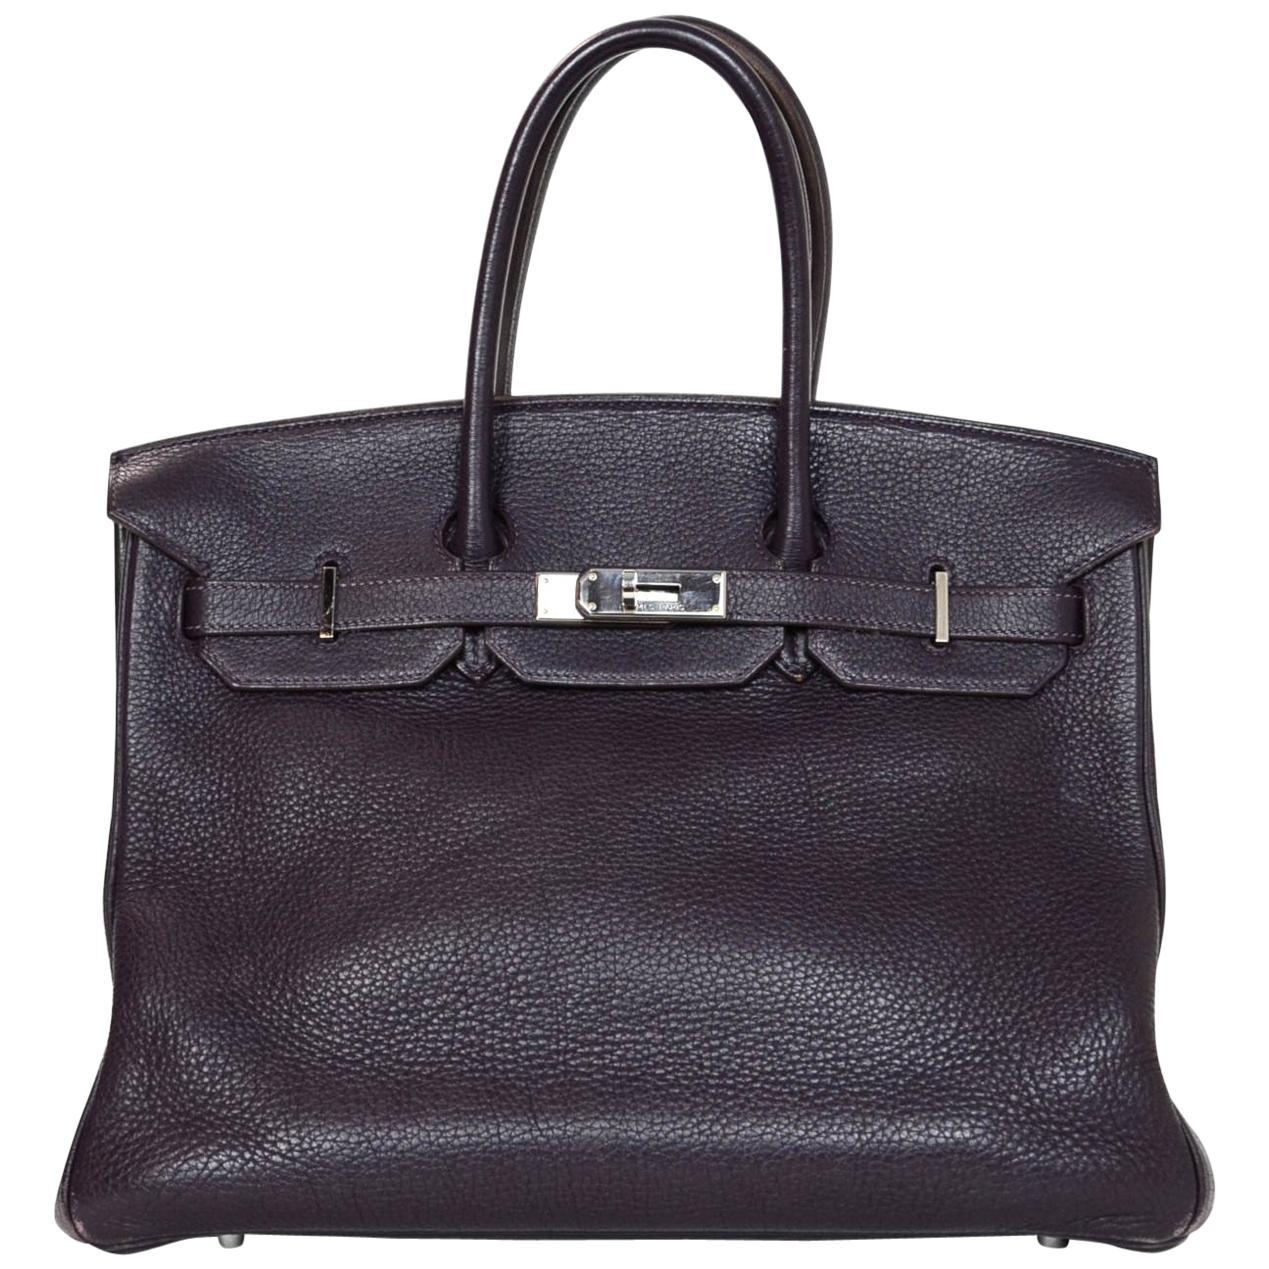 Hermes Purple Togo Leather 35cm Birkin Bag with Palladium Hardware